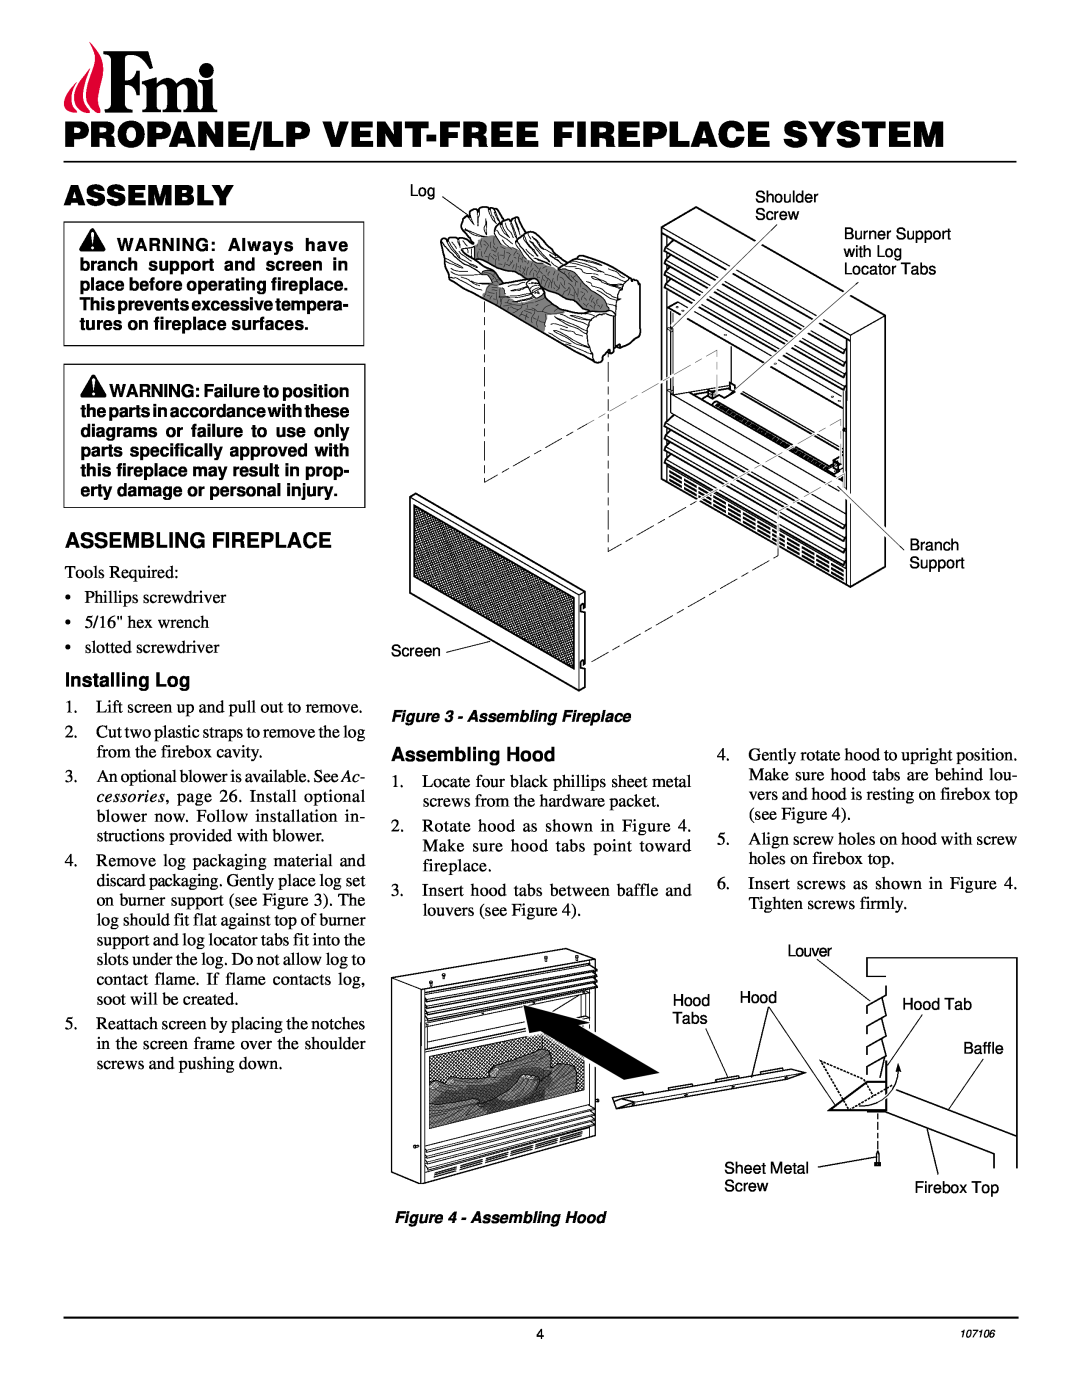 FMI FMH26TP Assembly, Assembling Fireplace, Installing Log, Assembling Hood, Propane/Lp Vent-Freefireplace System 